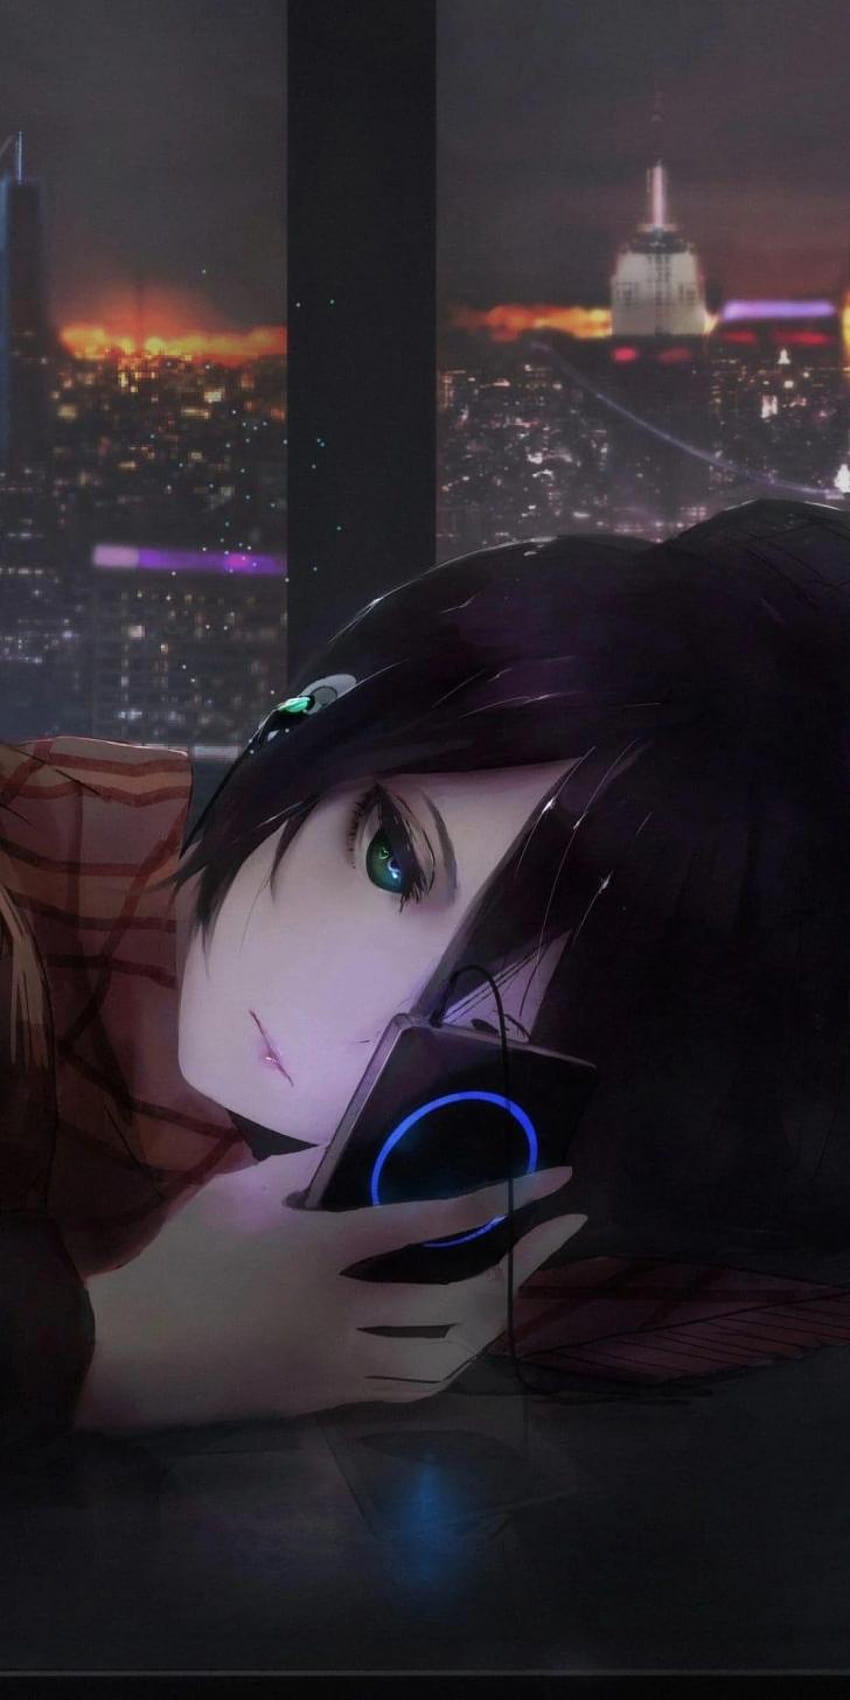 Triste Anime, anime fanart chorando papel de parede HD